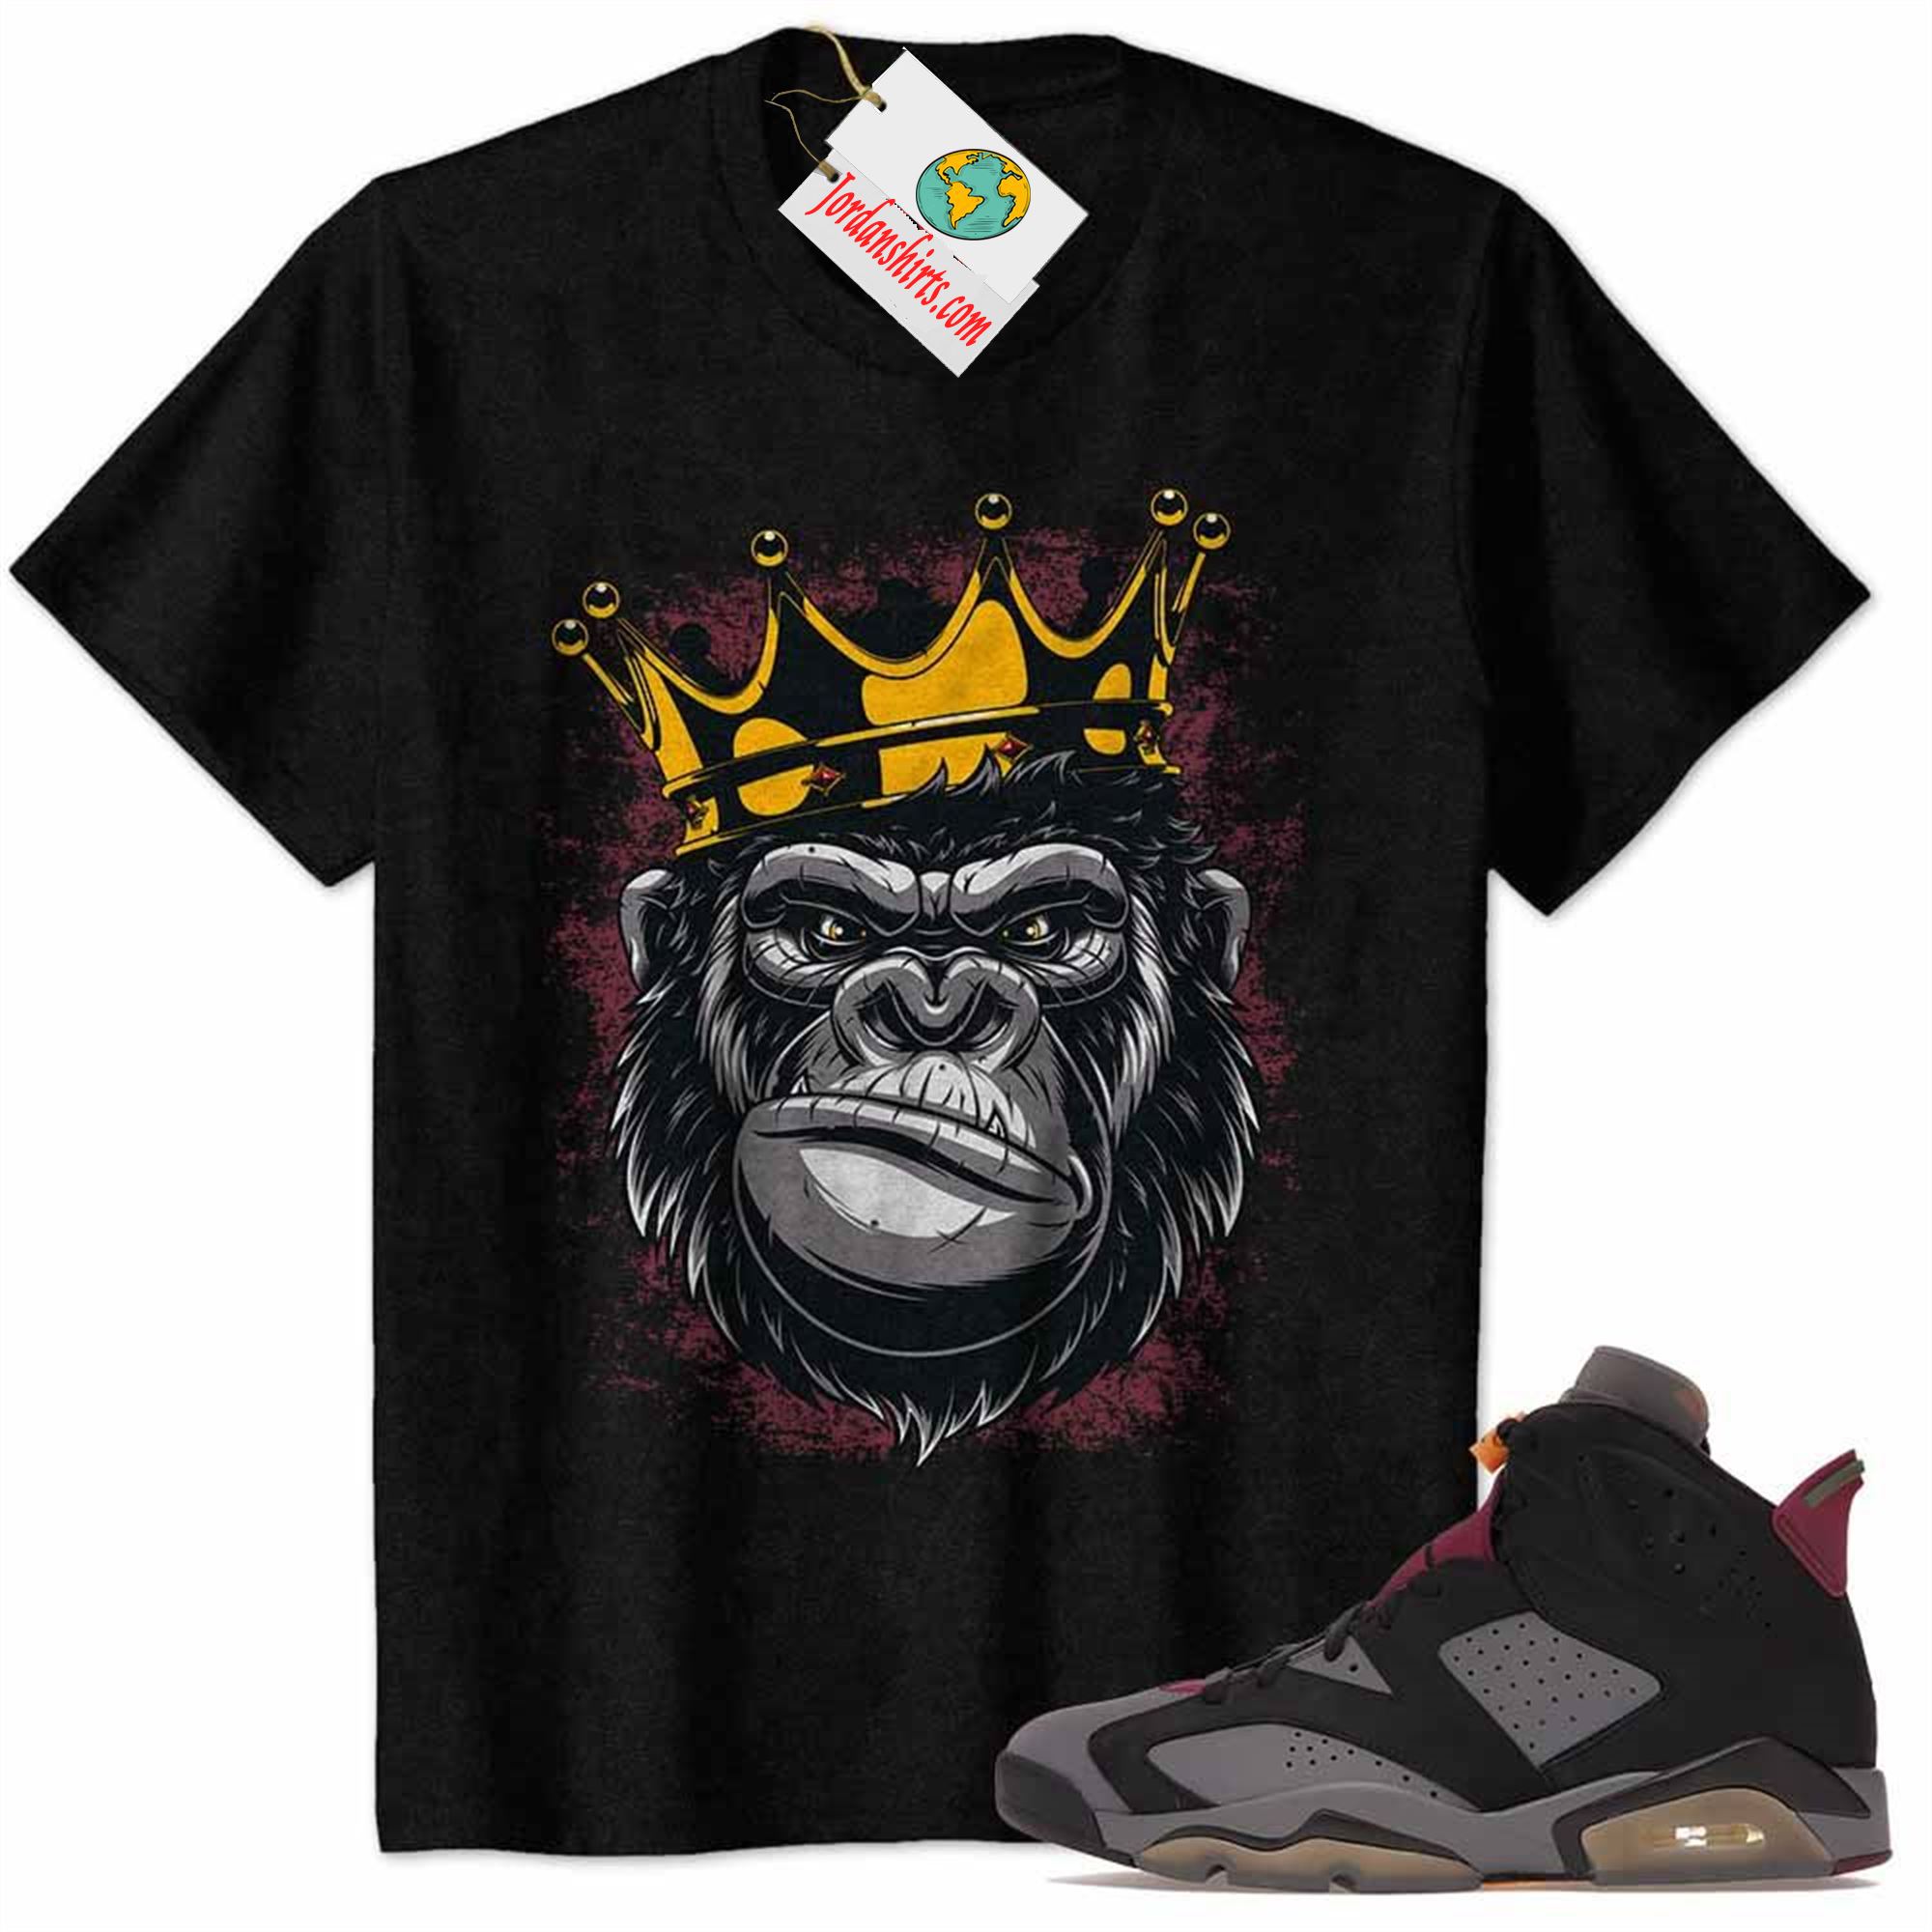 Jordan 6 Shirt, The Gorilla King With Crown Black Air Jordan 6 Bordeaux 6s Plus Size Up To 5xl